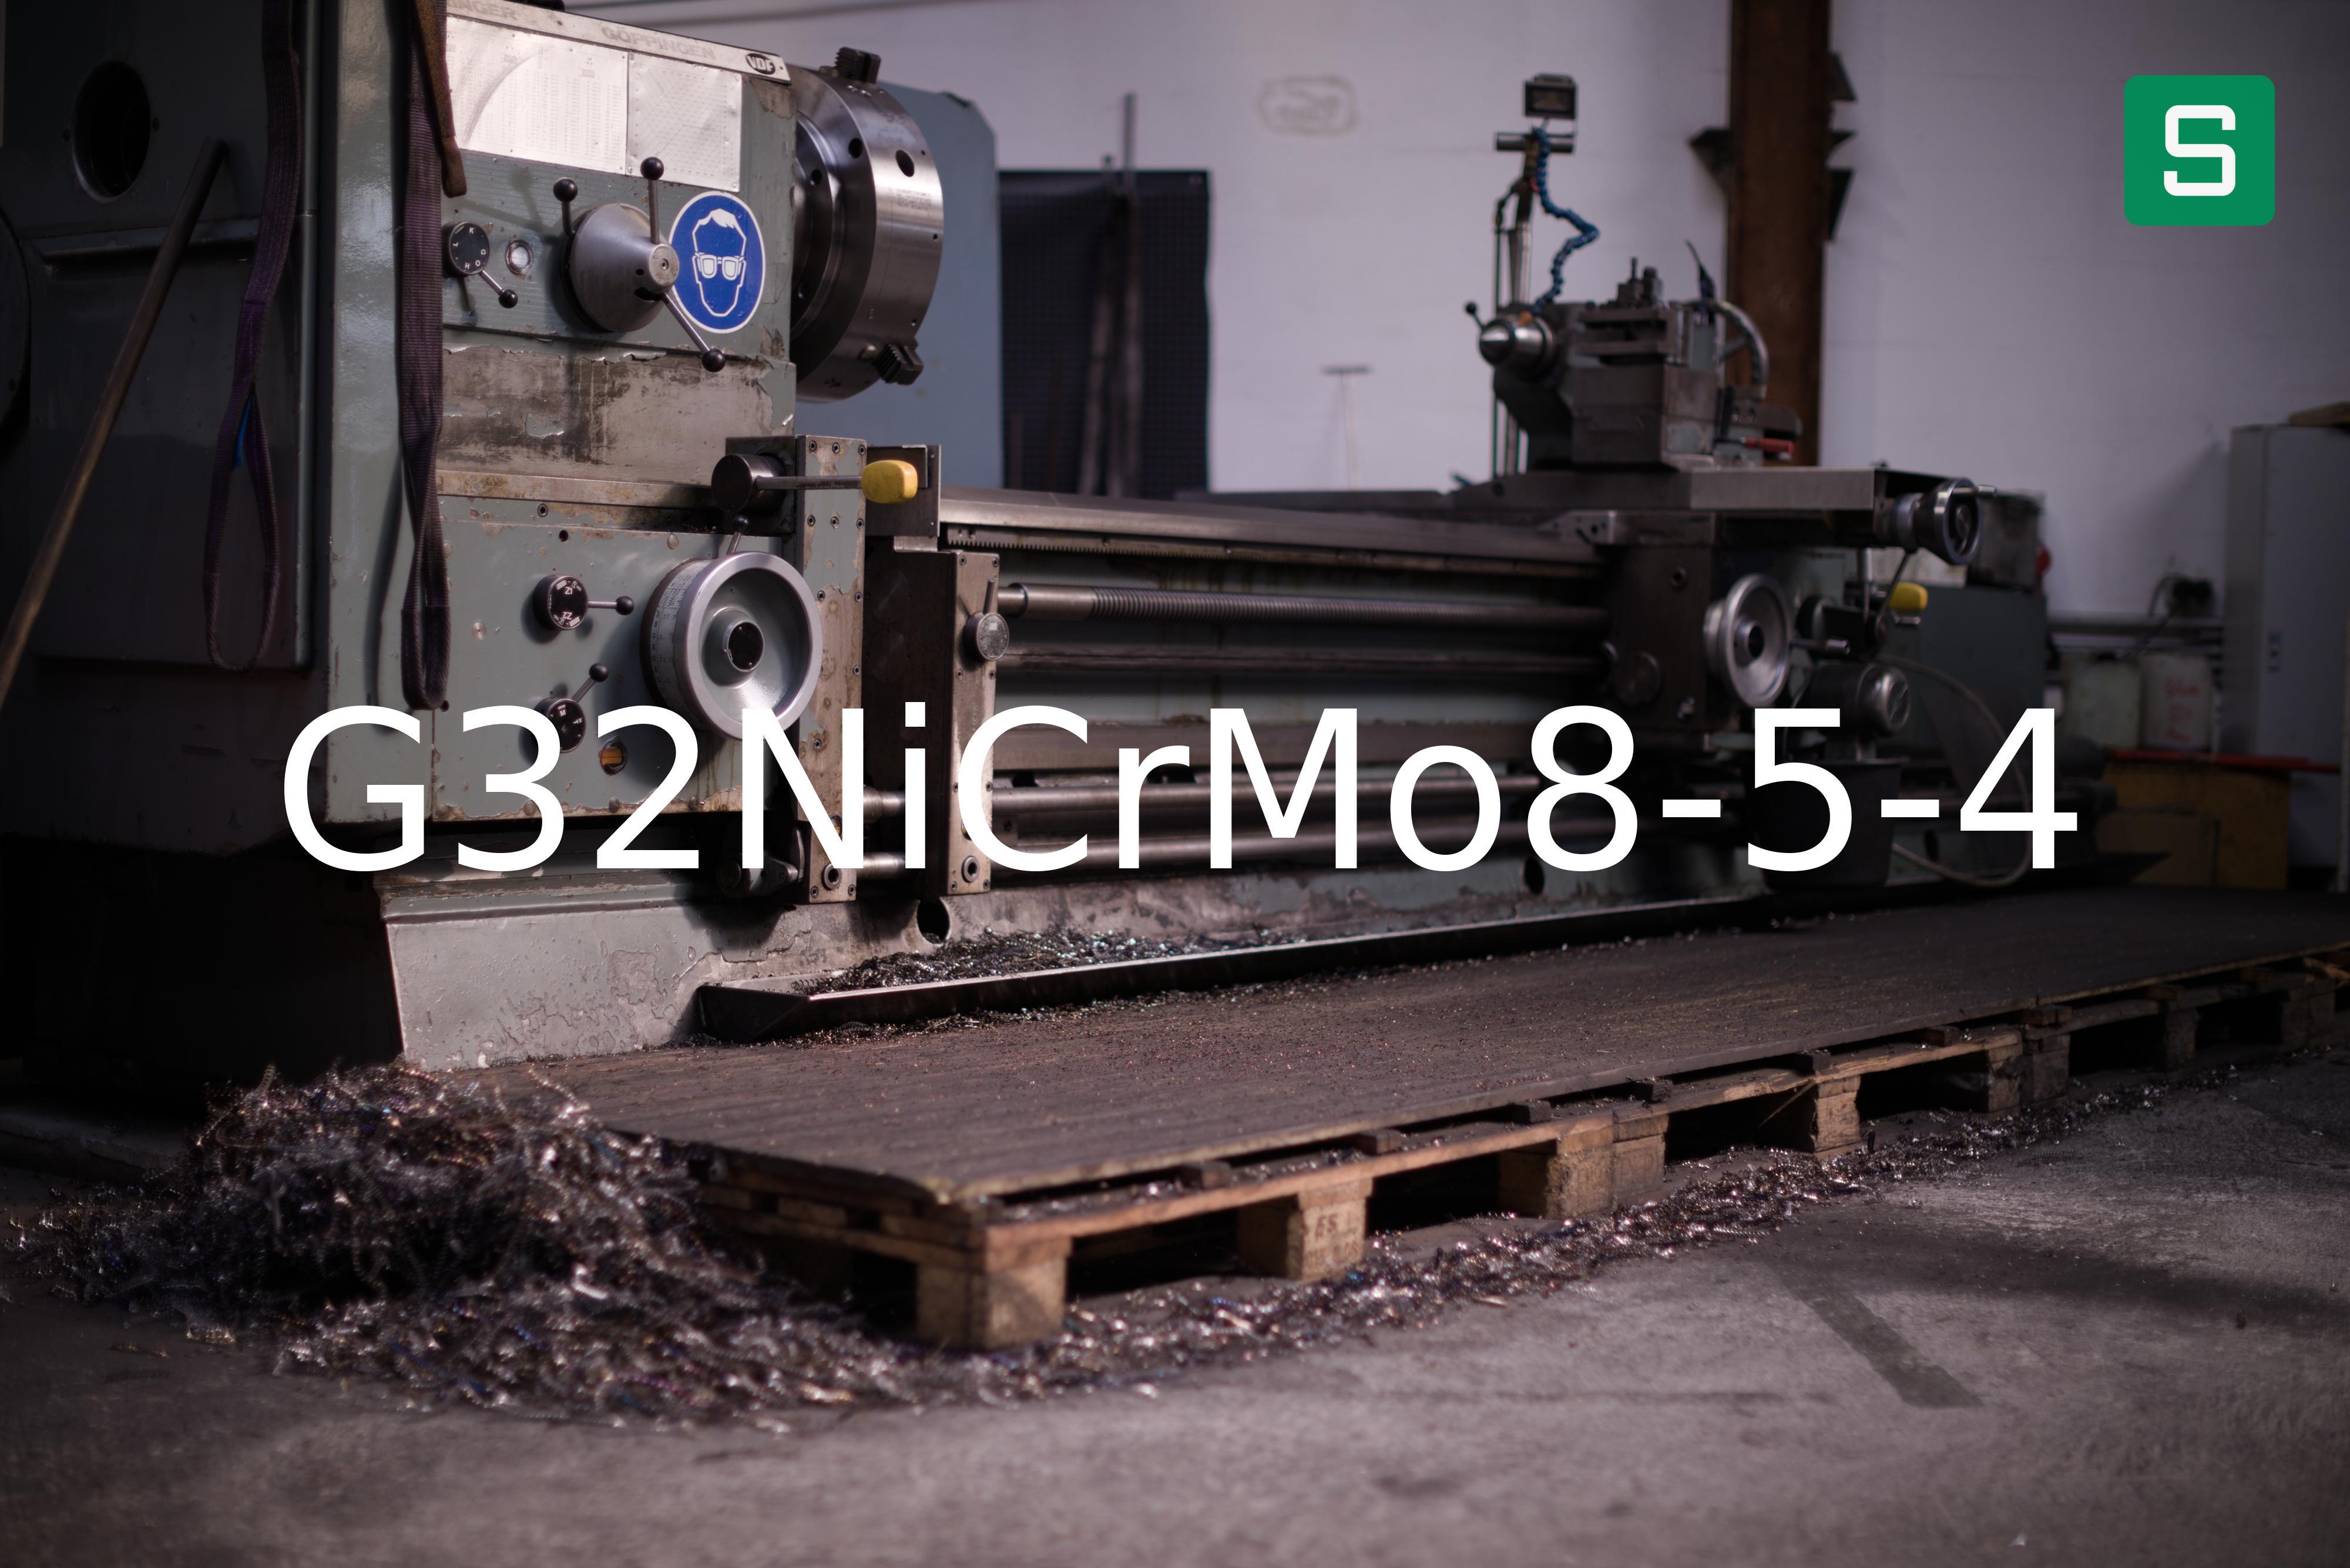 Steel Material: G32NiCrMo8-5-4